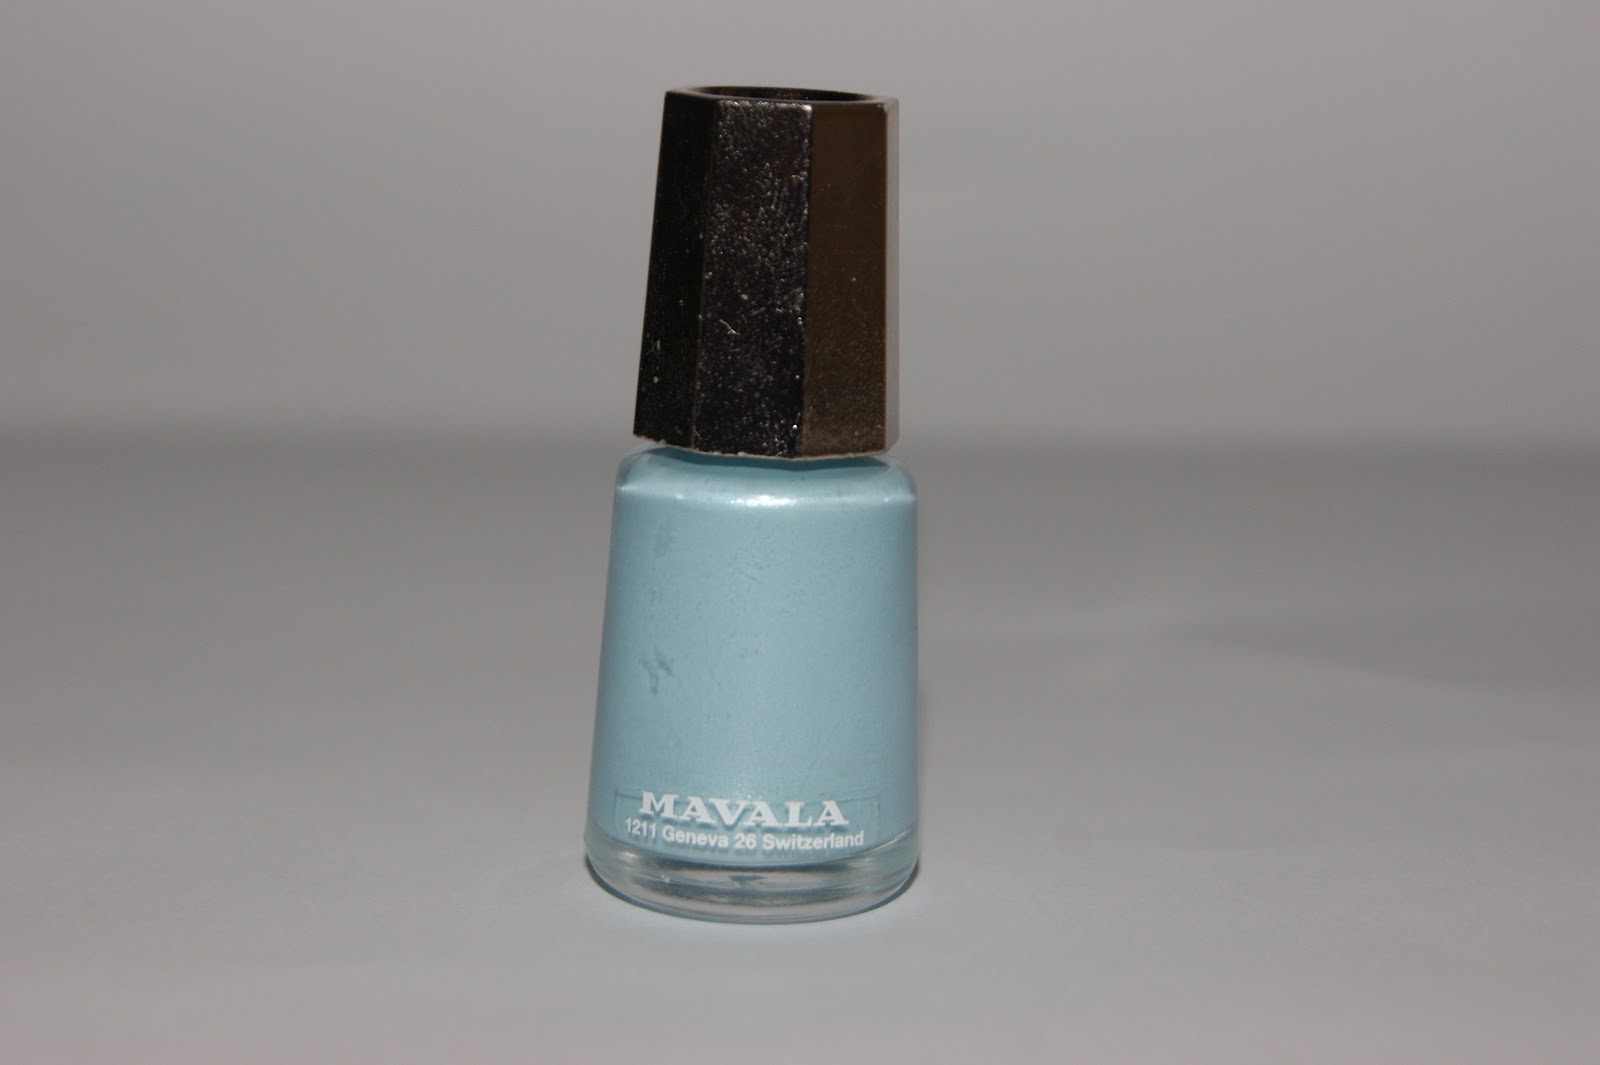 Mavala Blue Mint Nail Polish - Review The Girl